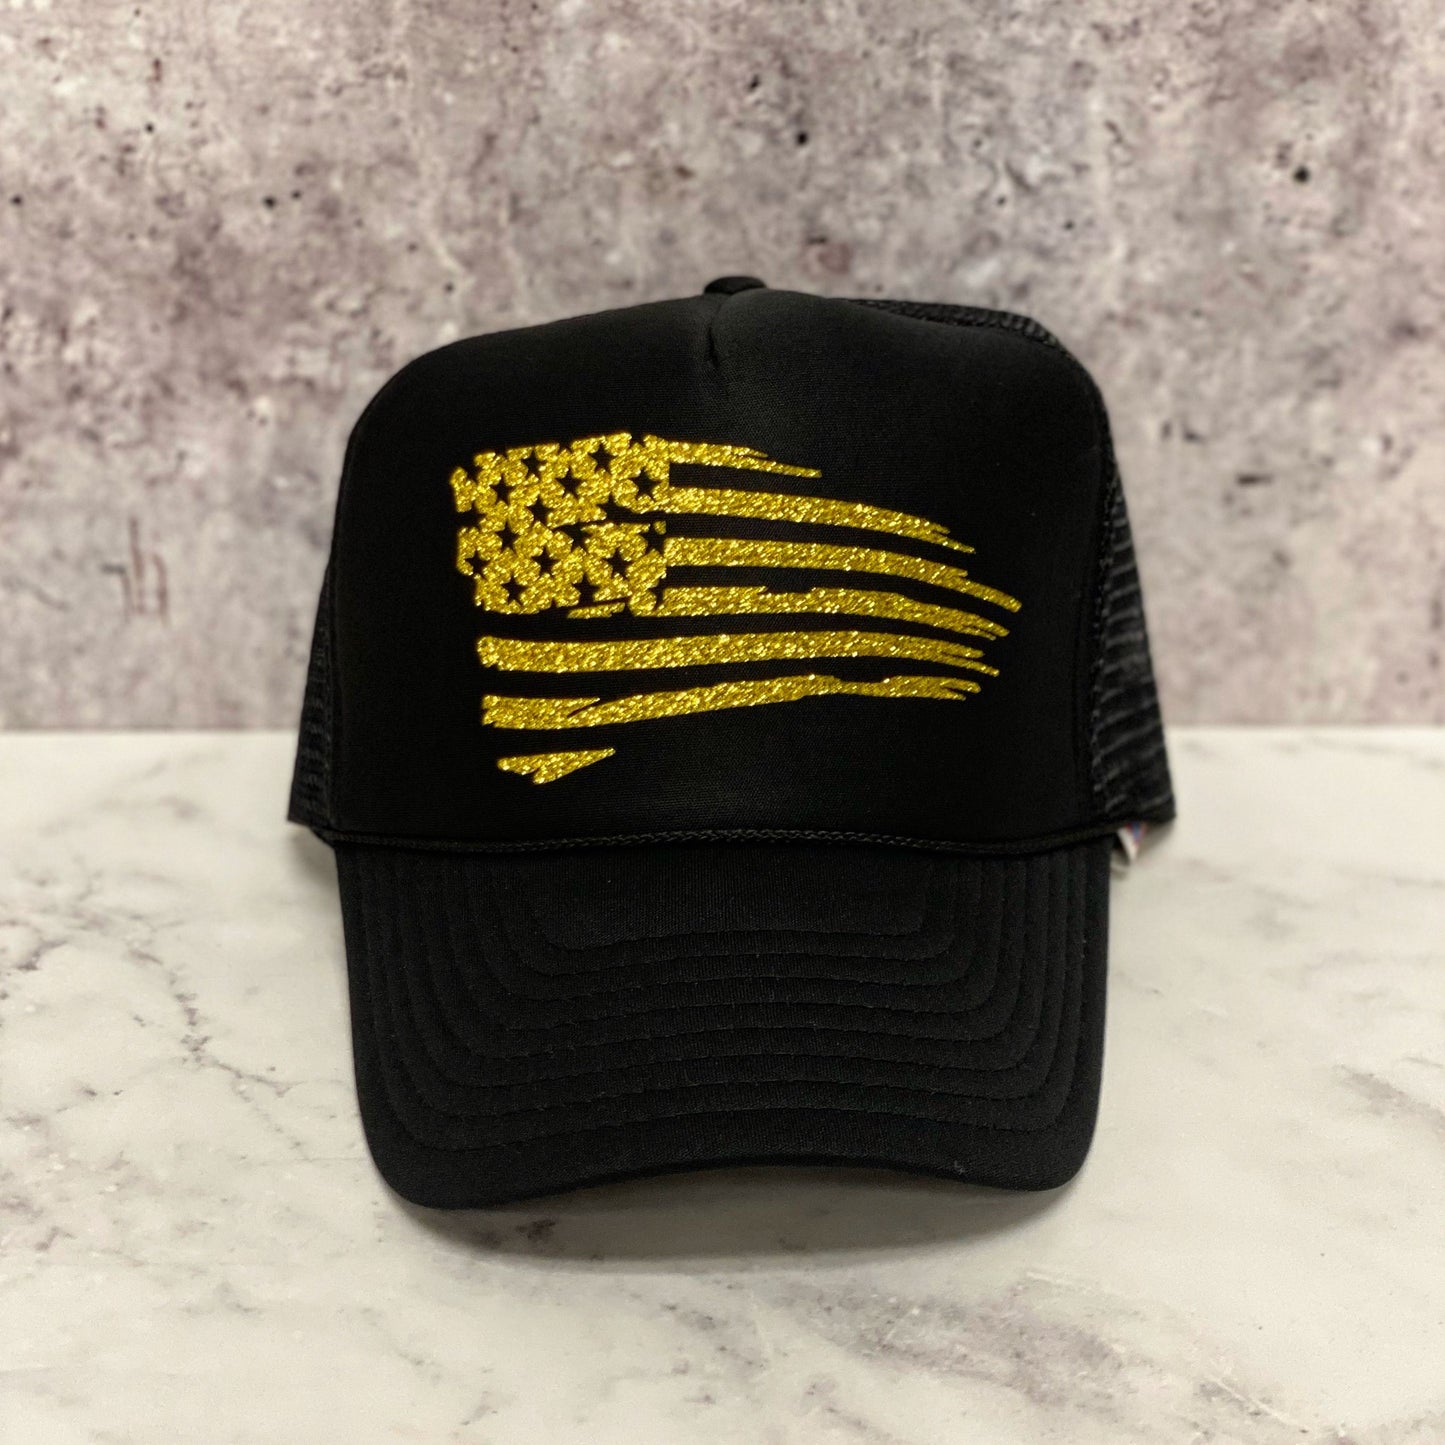 Distressed American Flag Trucker Hat